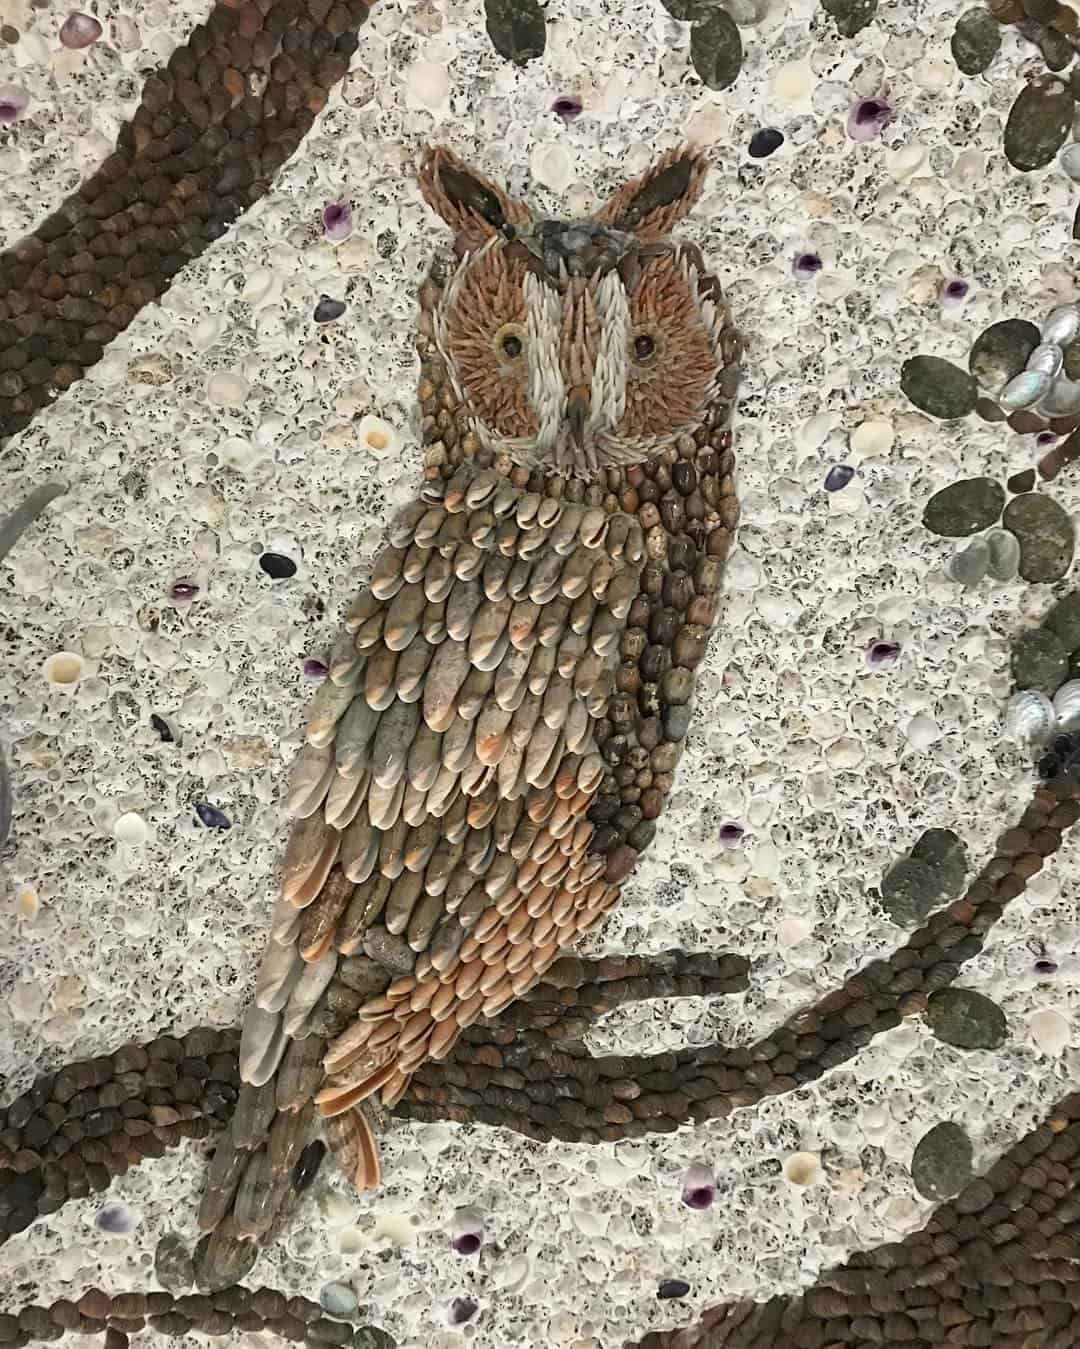 An owl sitting on a branch made of sea shells by blott kerr wilson